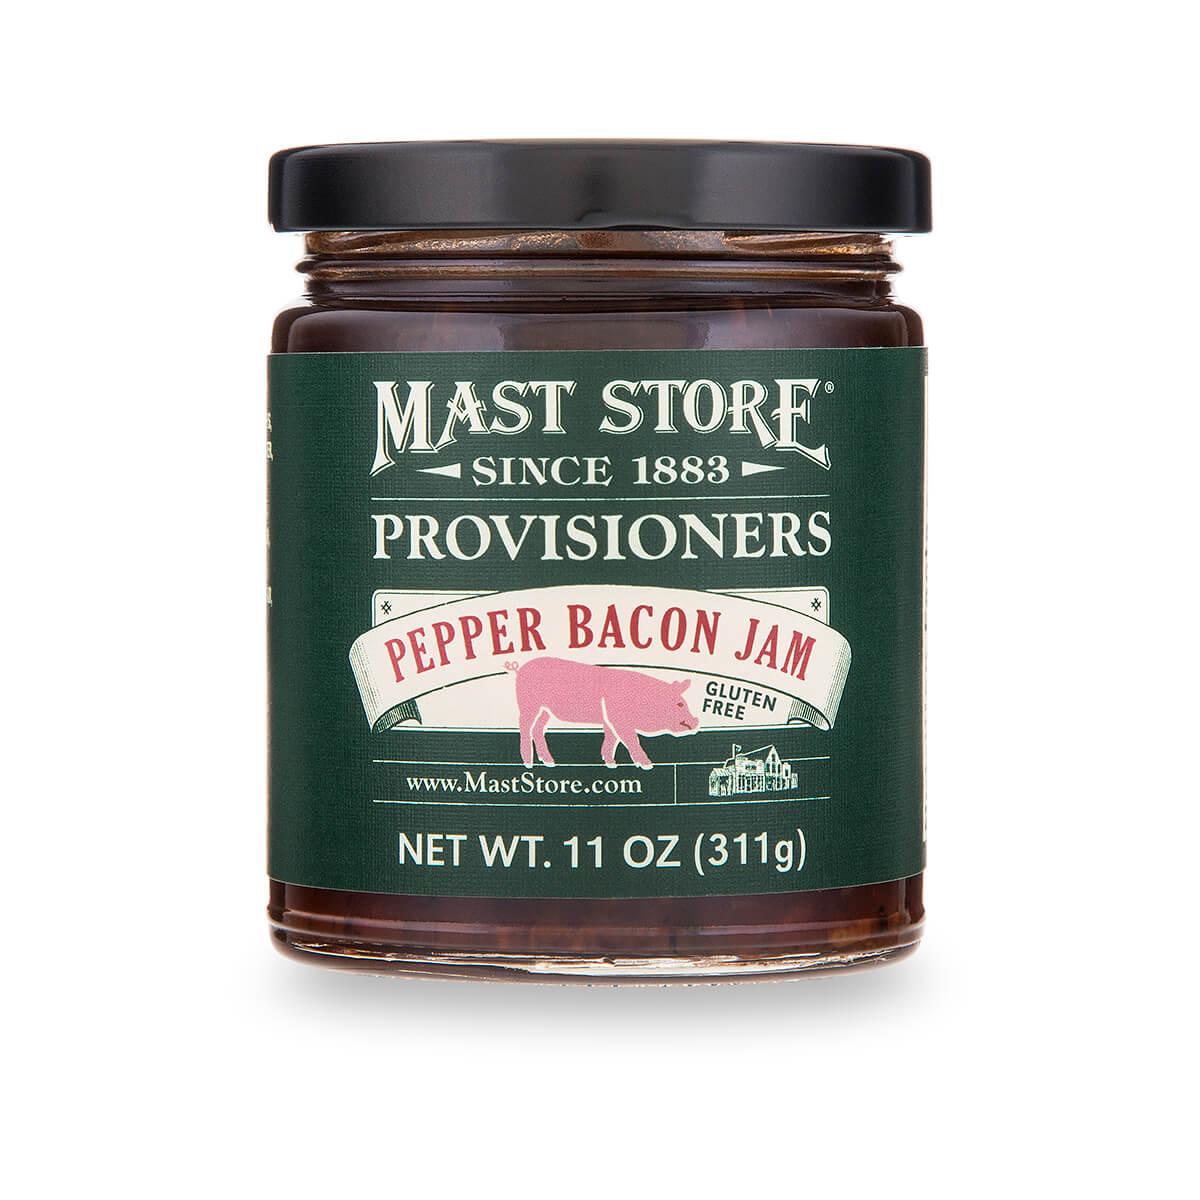  Mast Store Provisioners Pepper Bacon Jam